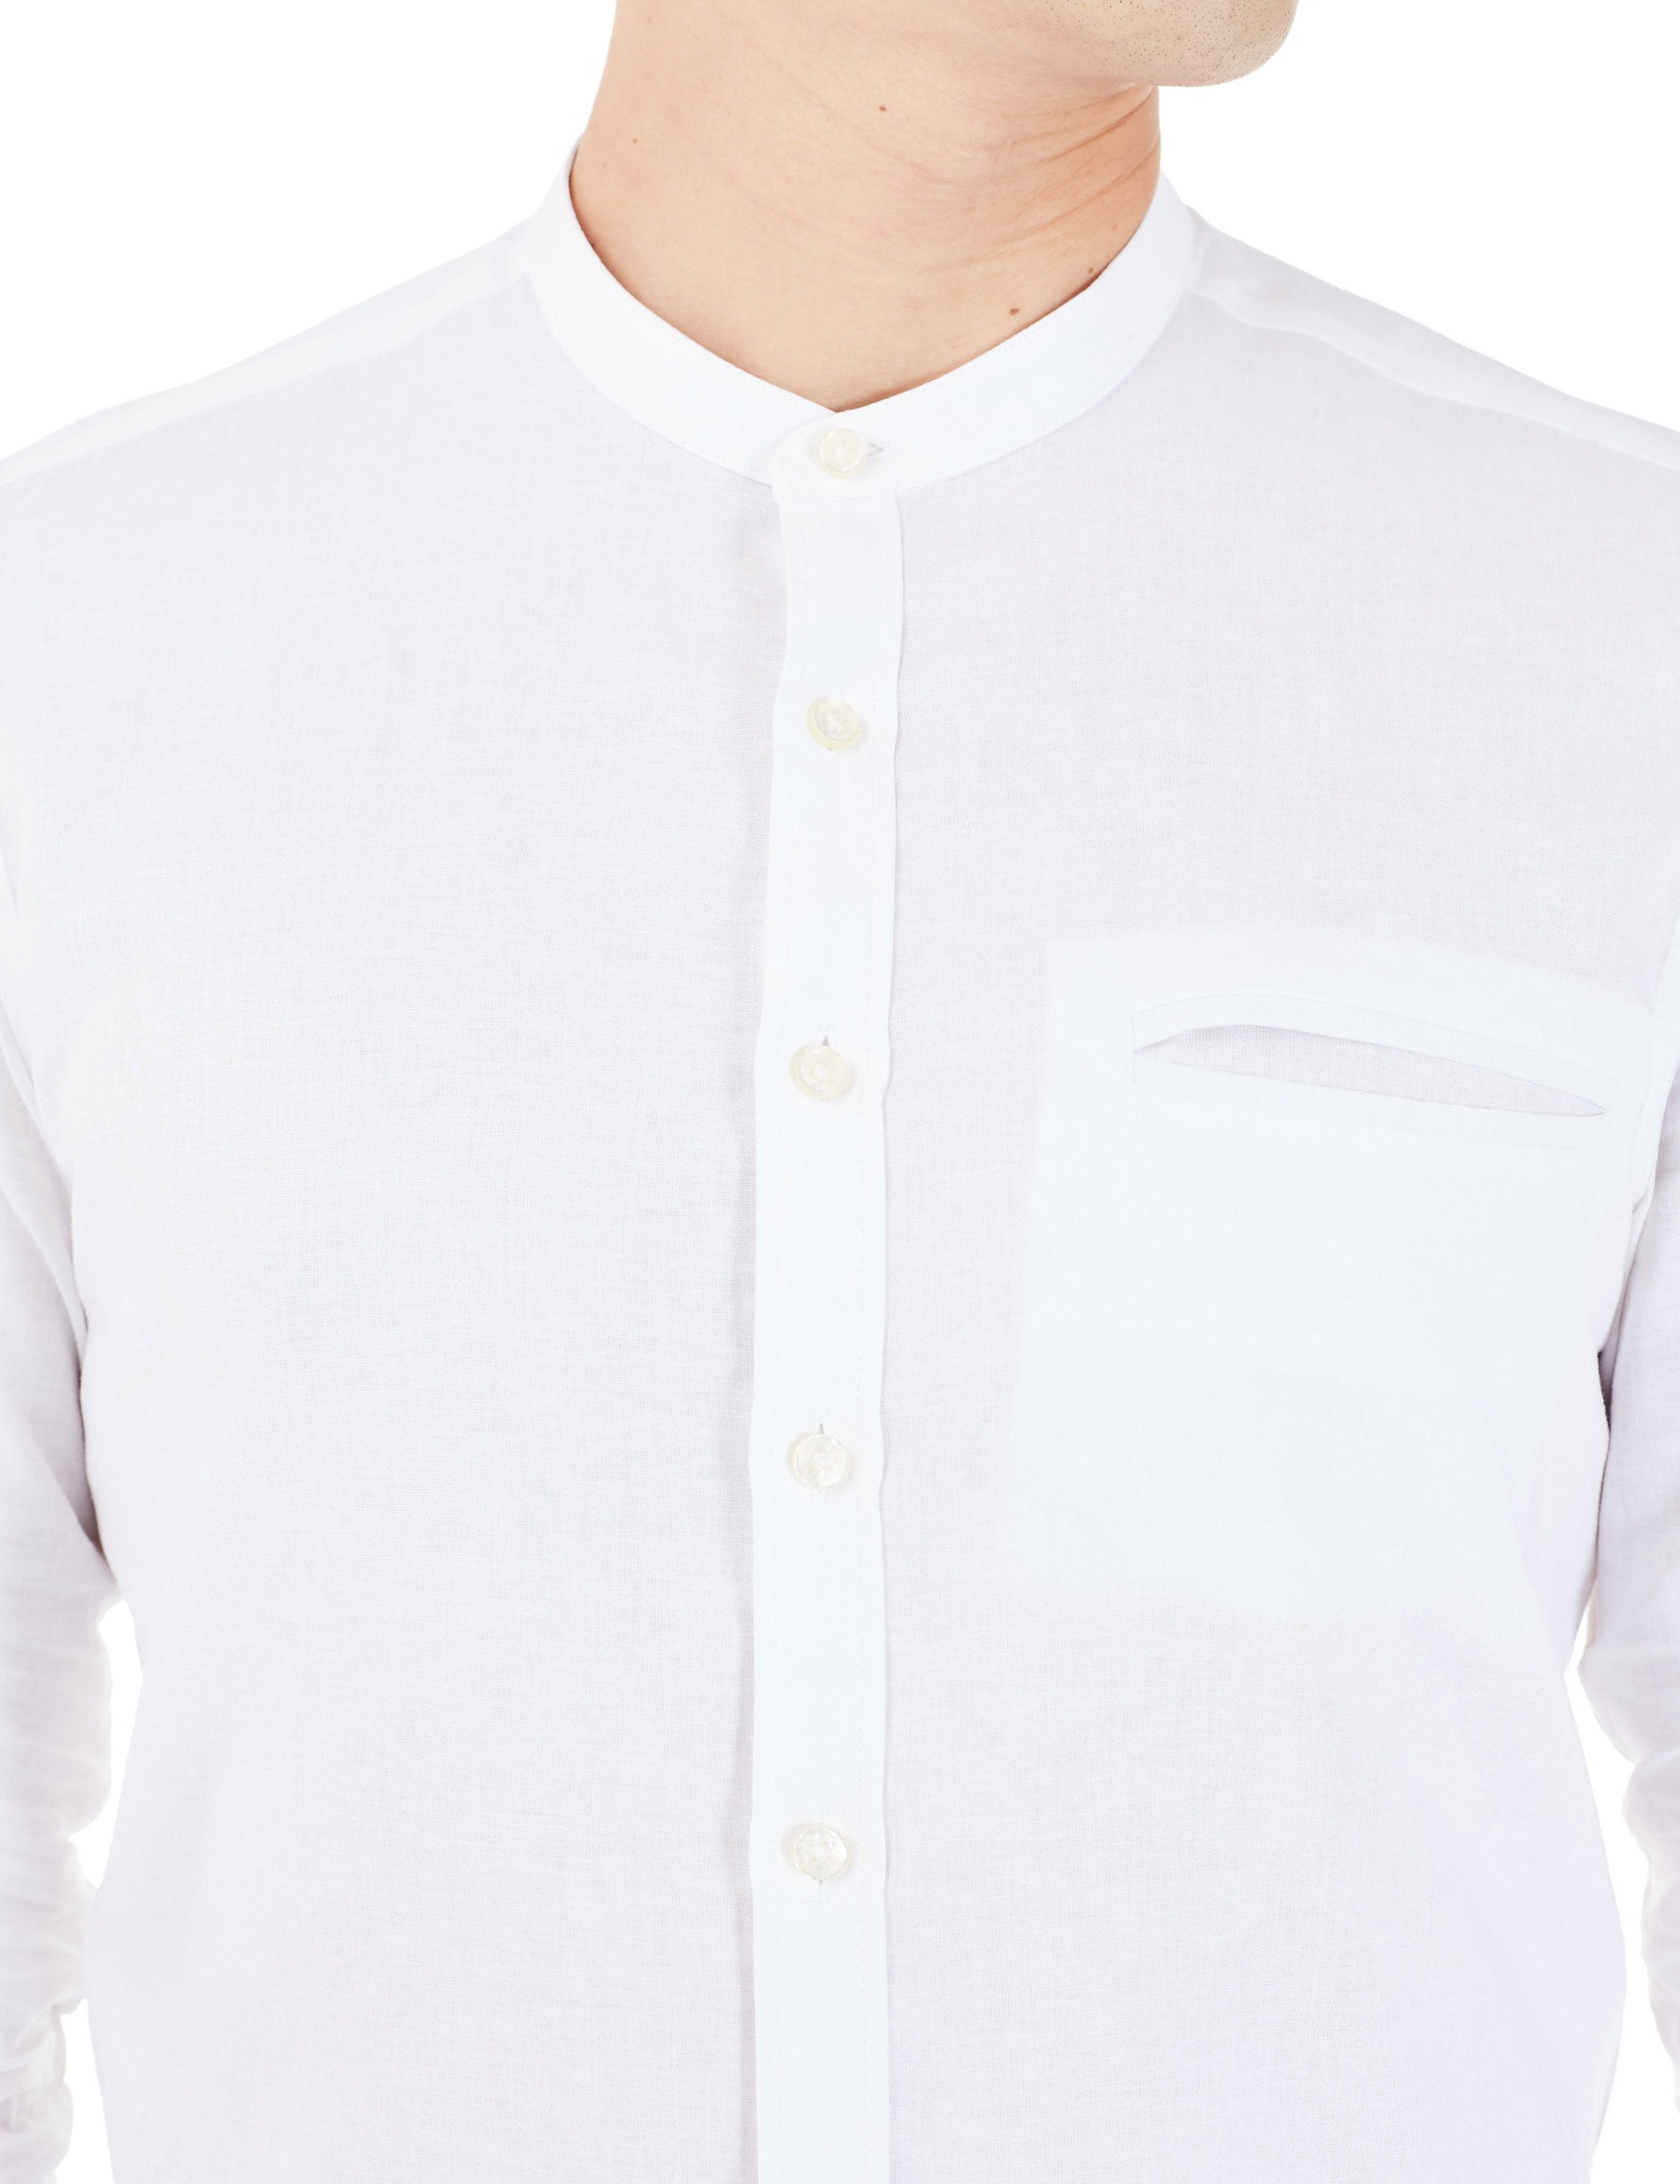 Solid White Cotton Linen Mandarin Collar Welt Pocket Slim/Tailored